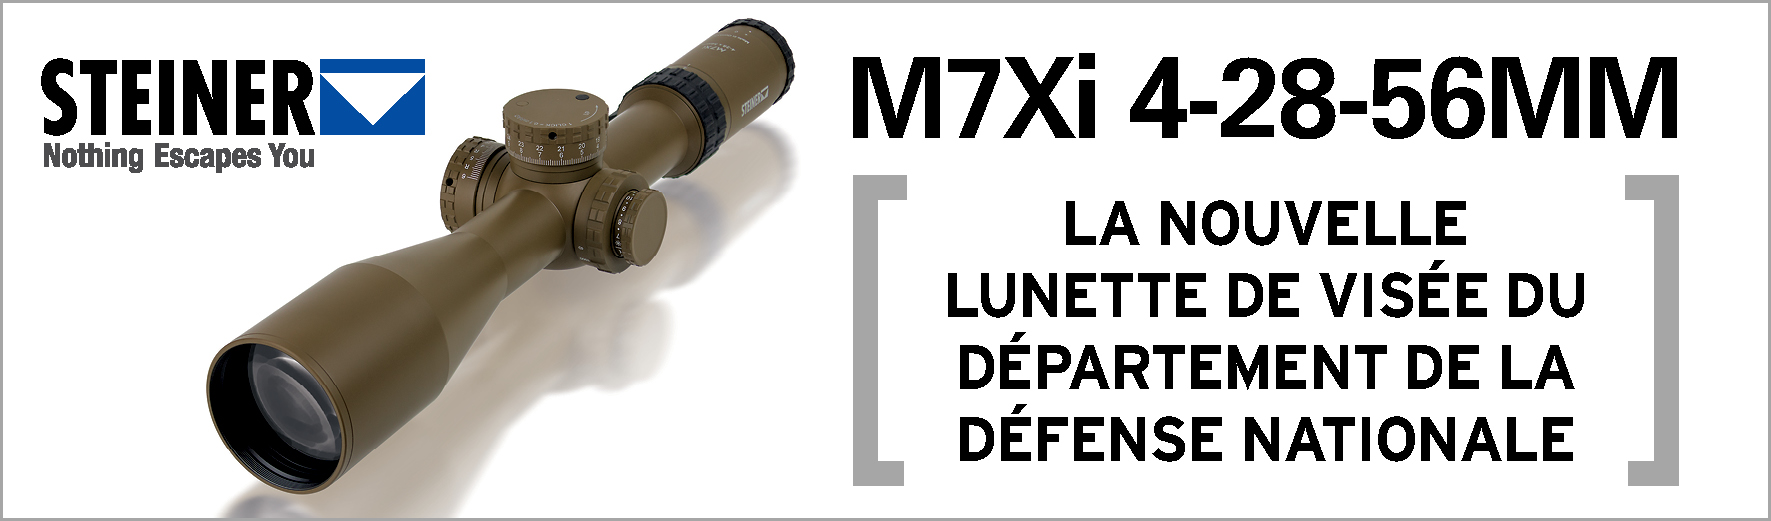 Steiner M7Xi Canadian Army Long-Range Riflescope 2023 - 850x250 - FR